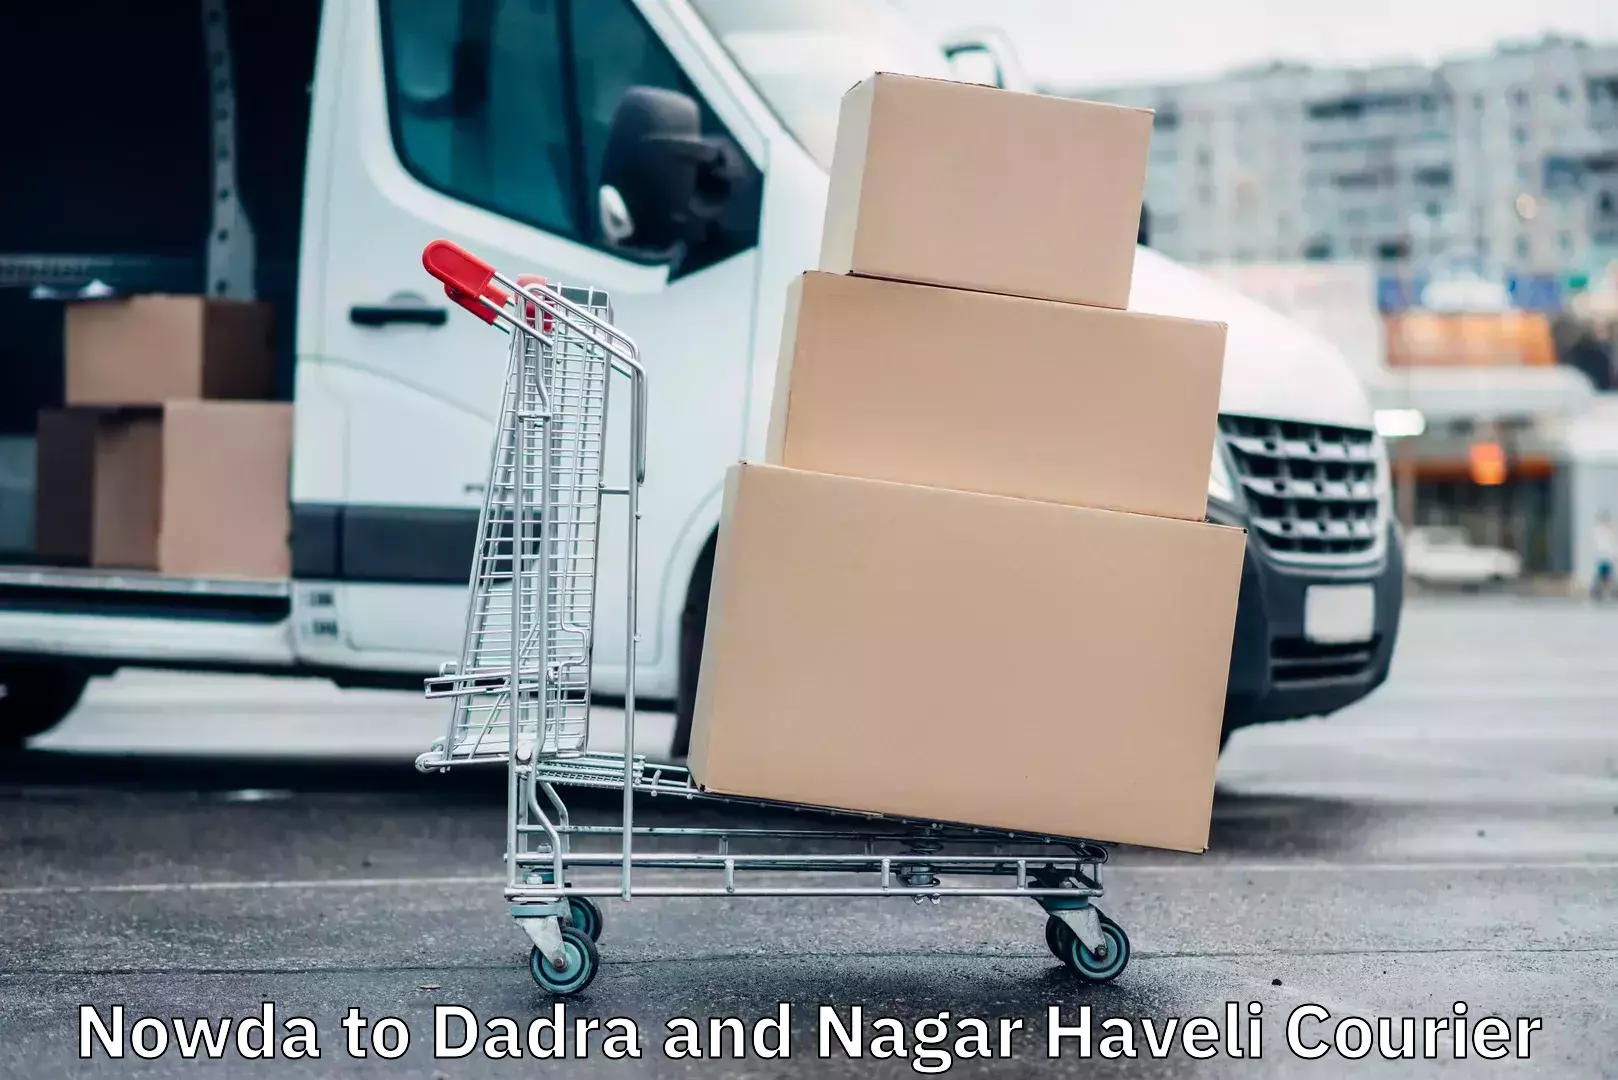 Business shipping needs Nowda to Dadra and Nagar Haveli